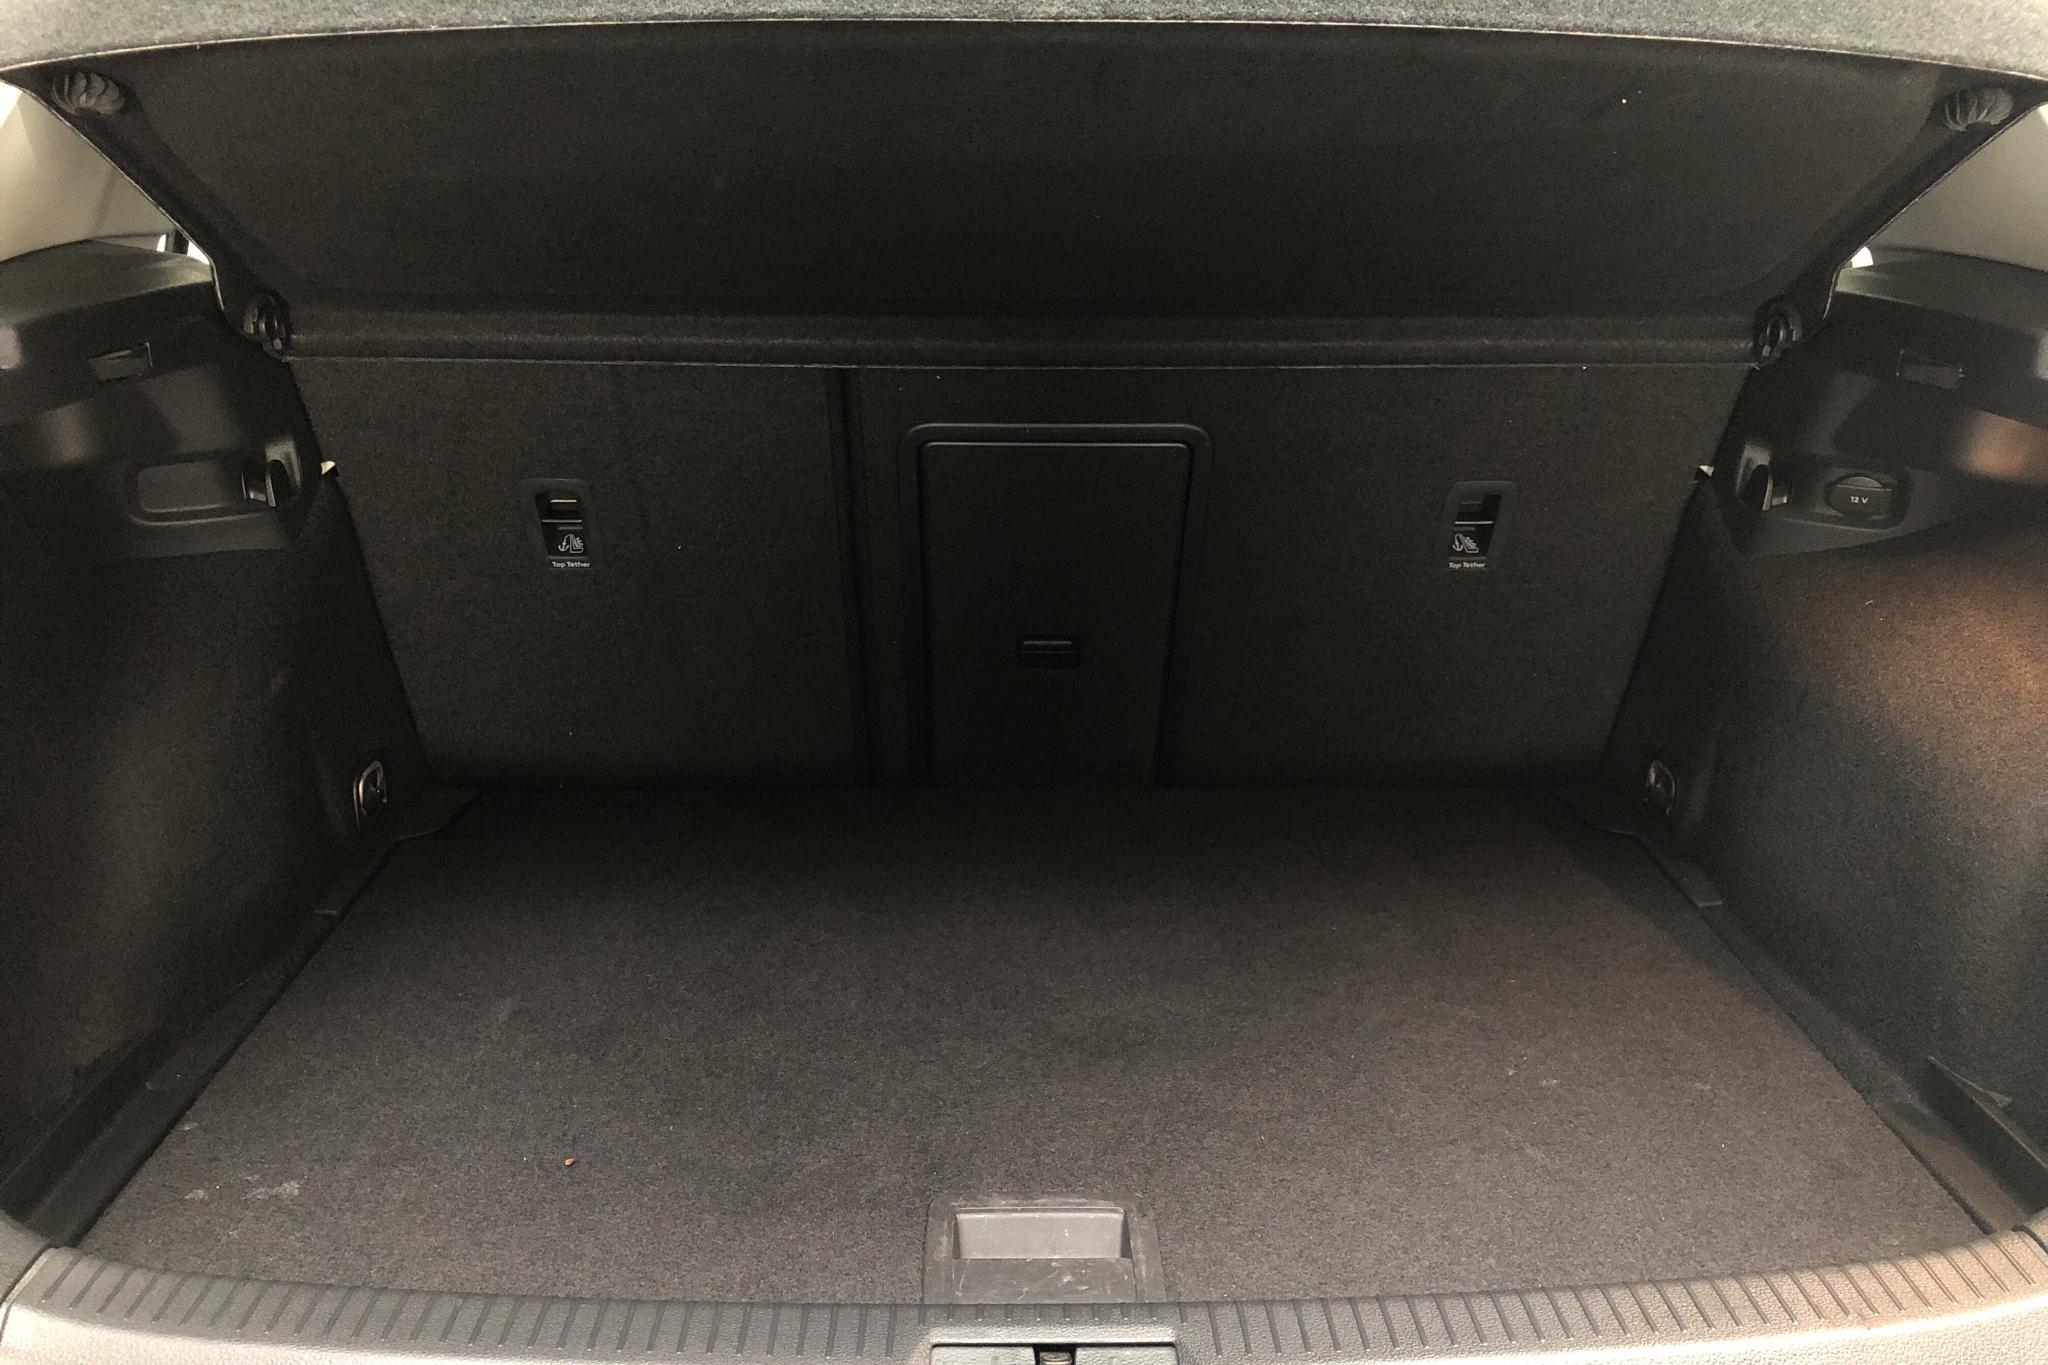 VW Golf VII 1.6 TDI 5dr (115hk) - 8 738 mil - Manuell - vit - 2019